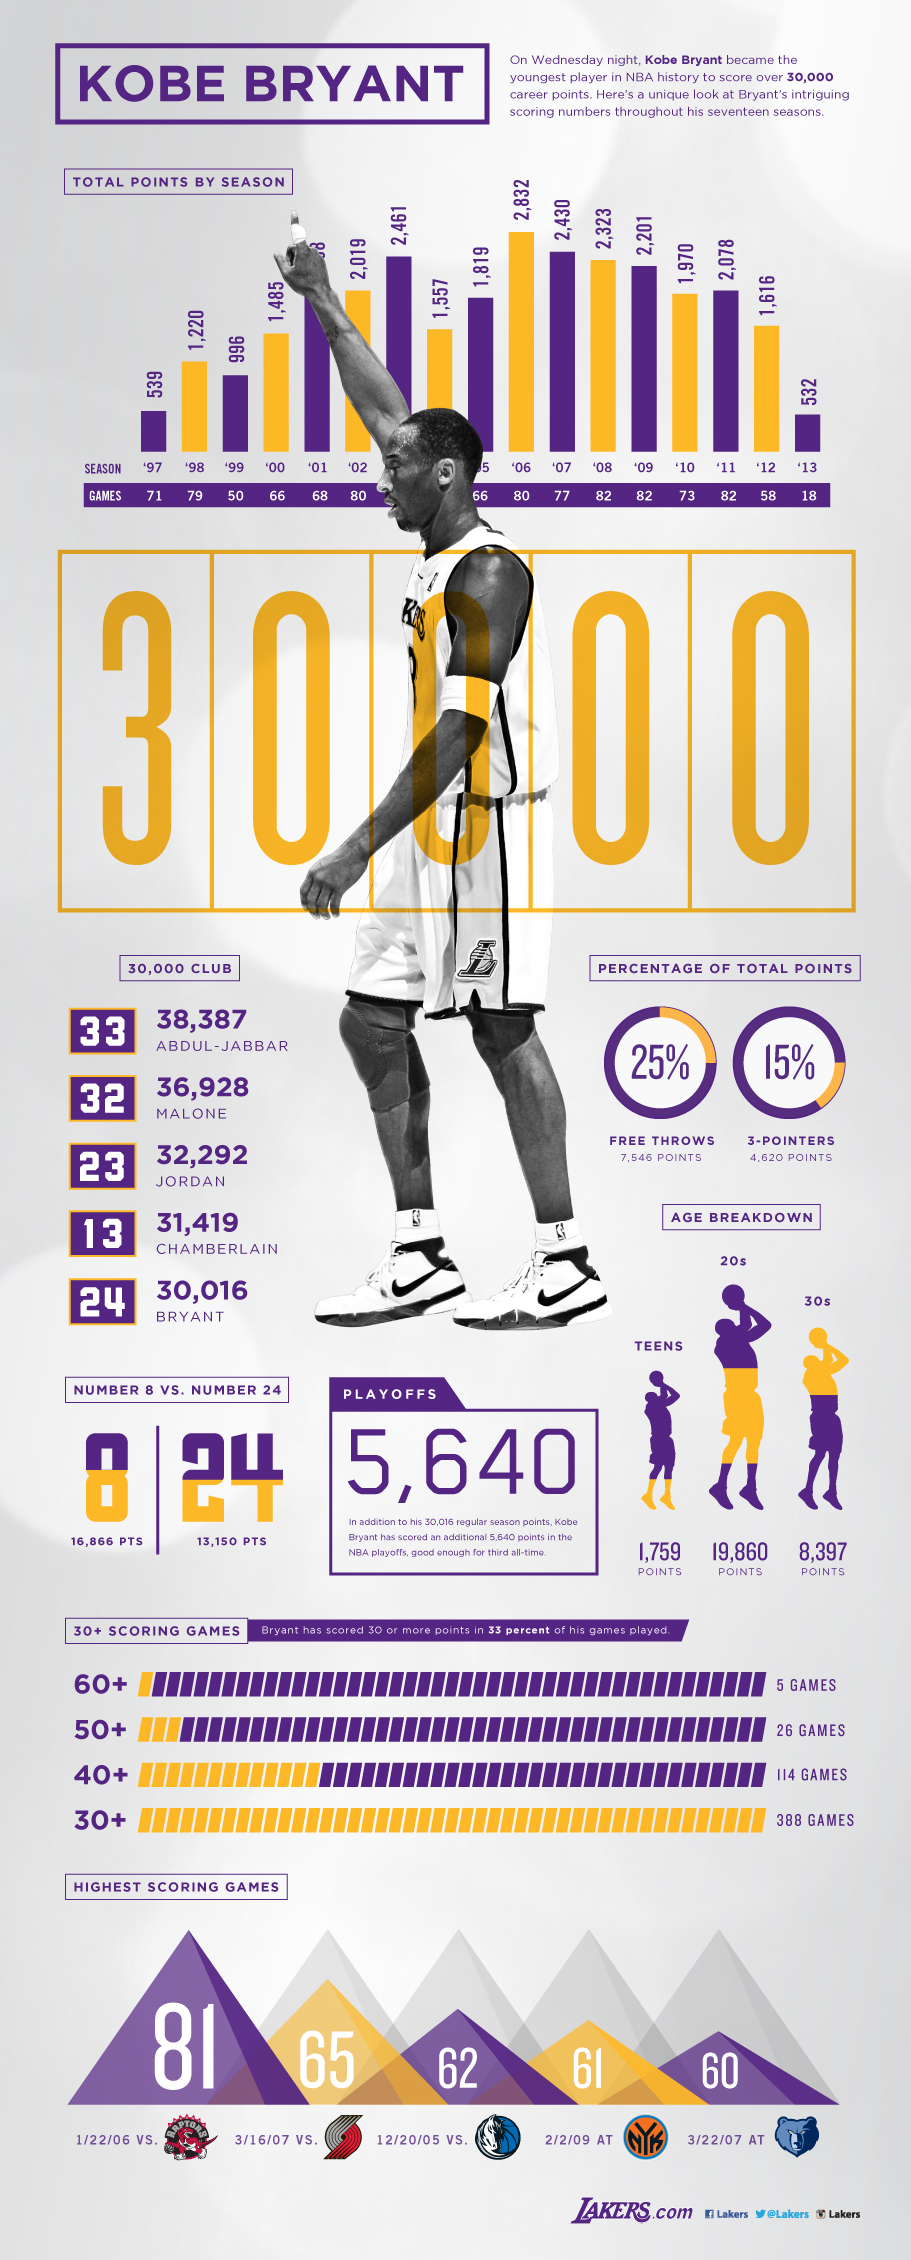 Kobe hits 30,000